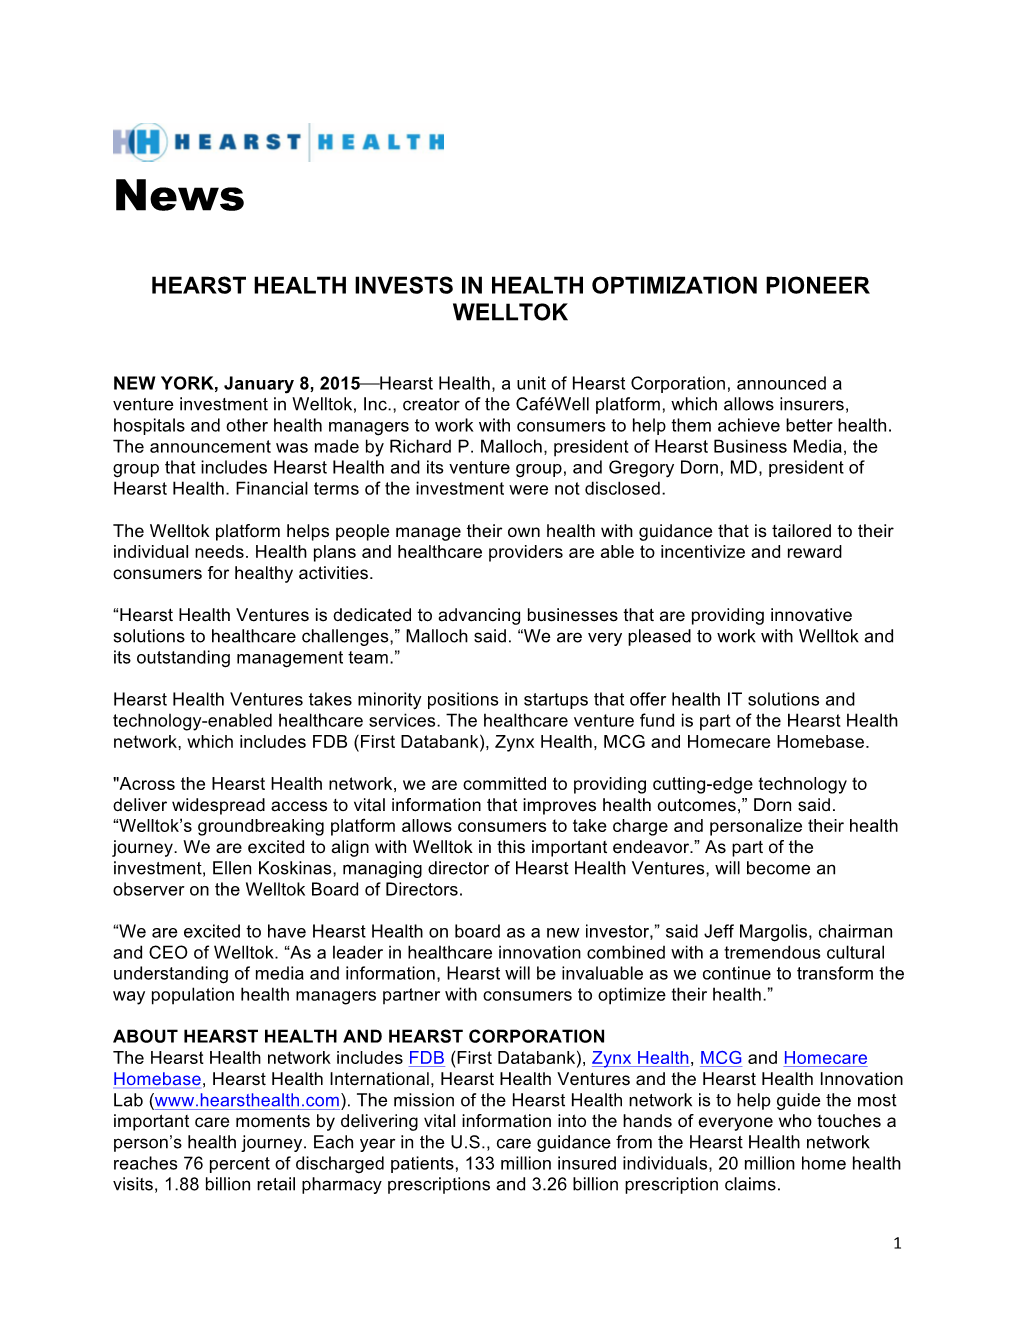 Hearst Health Invests in Health Optimization Pioneer Welltok